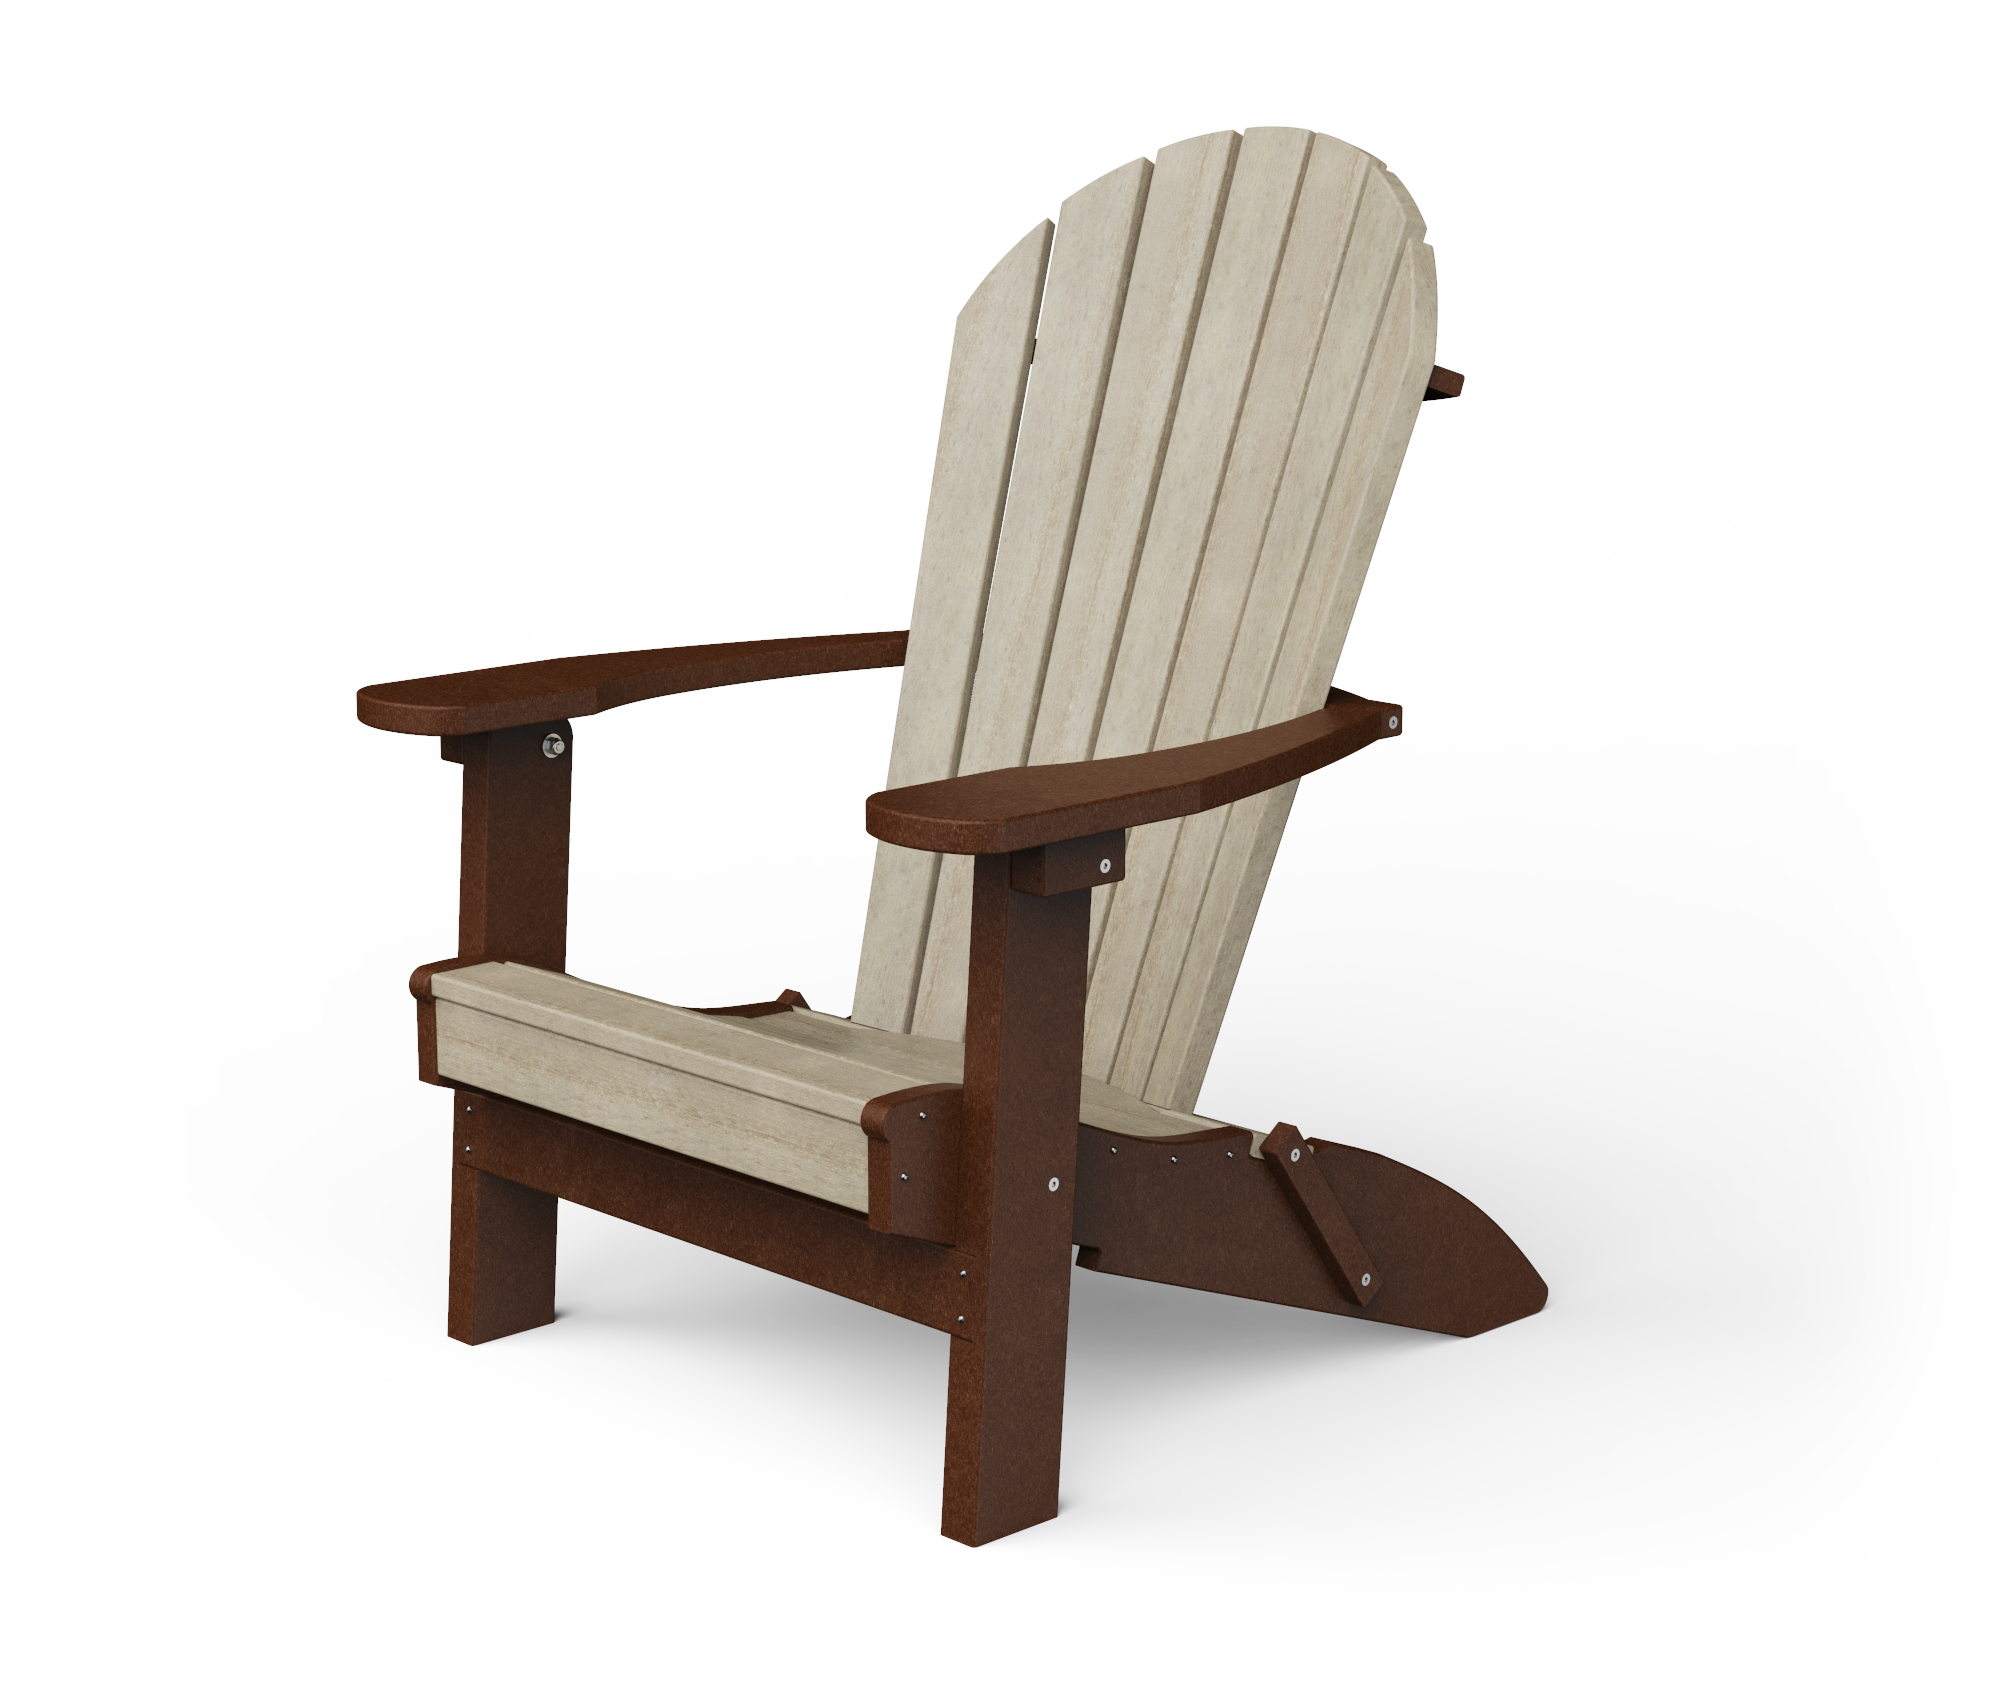 Poly Adirondack folding chair.